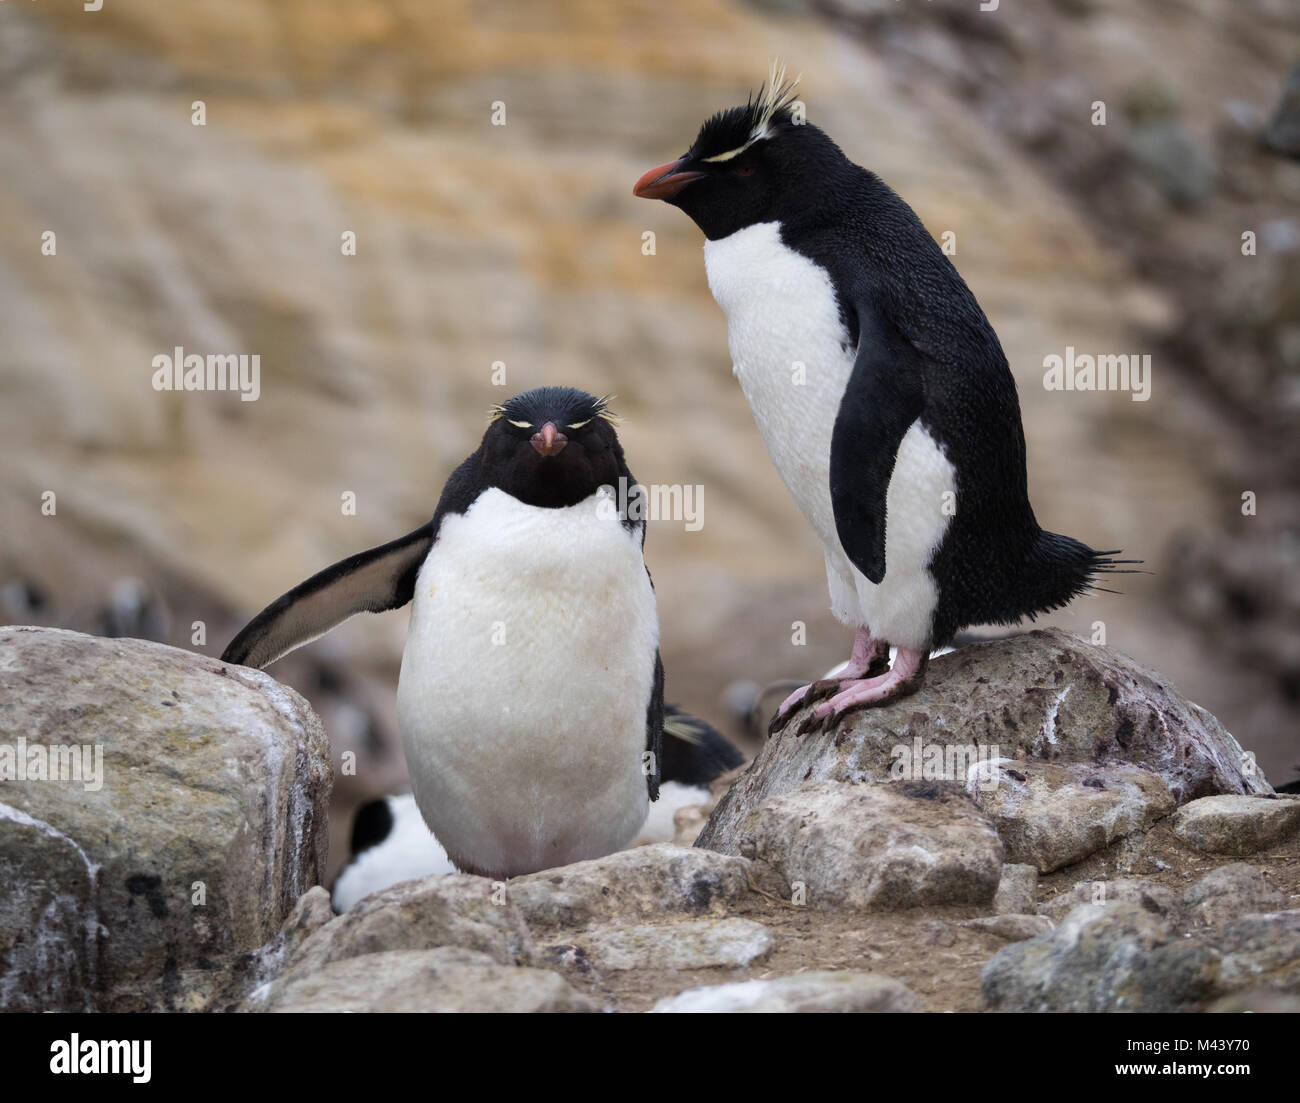 A rockhopper penguin climbing up rocks past a standing rockhopper penguin with pink webbed feet. Stock Photo